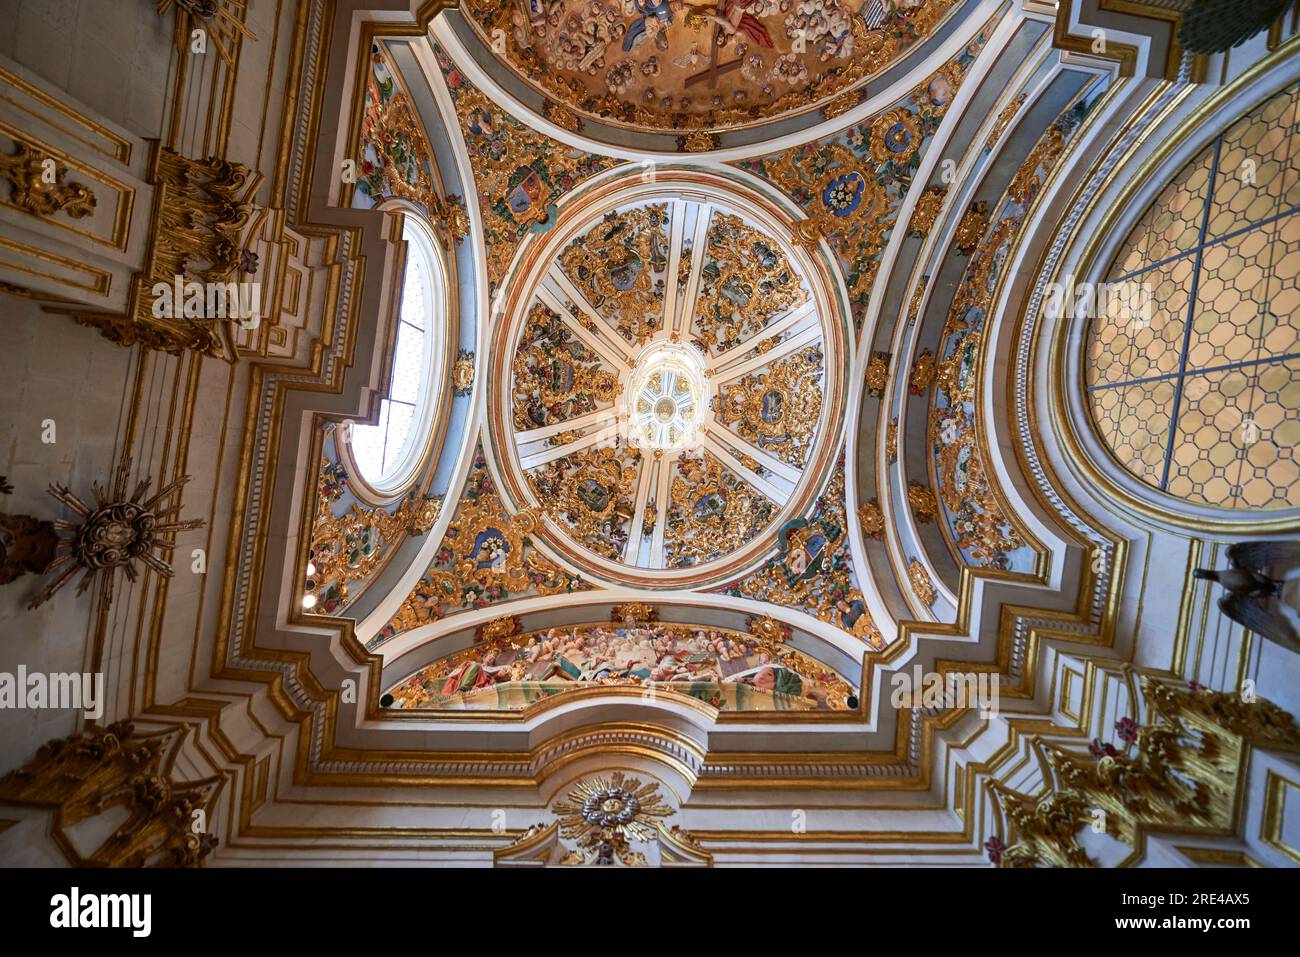 Vue intérieure de la cathédrale de Burgos, Burgos, Castilla y Leon, Espagne Banque D'Images